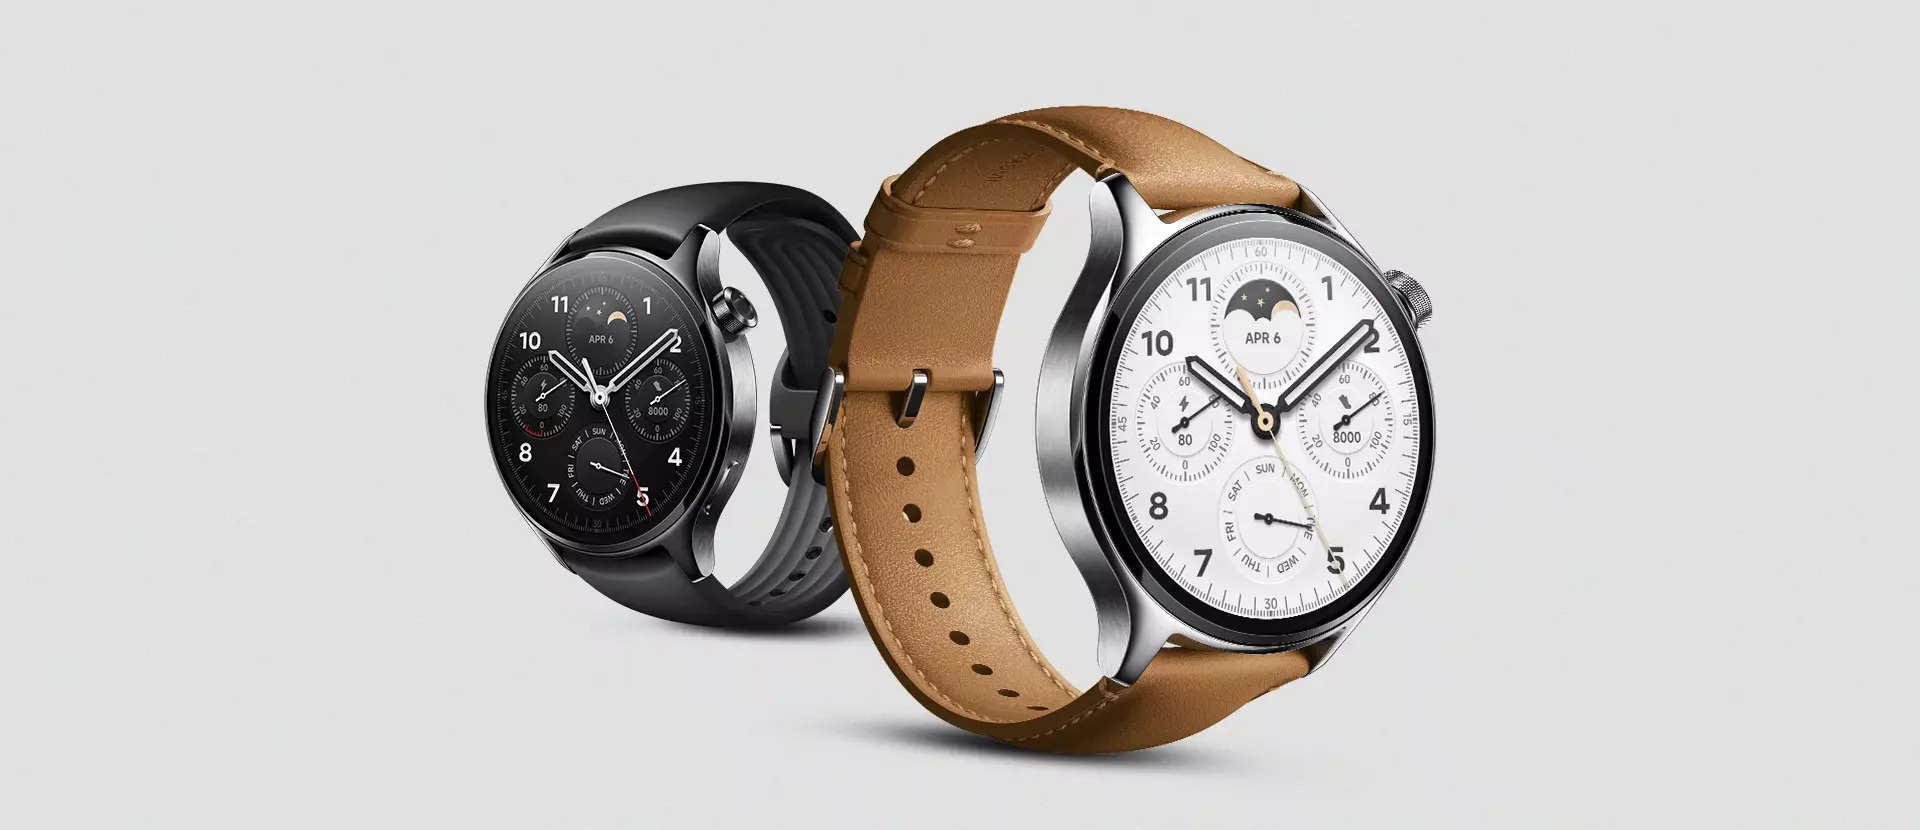 Xiaomi Watch S1 Pro Vs. Xiaomi Watch S1: What's New?